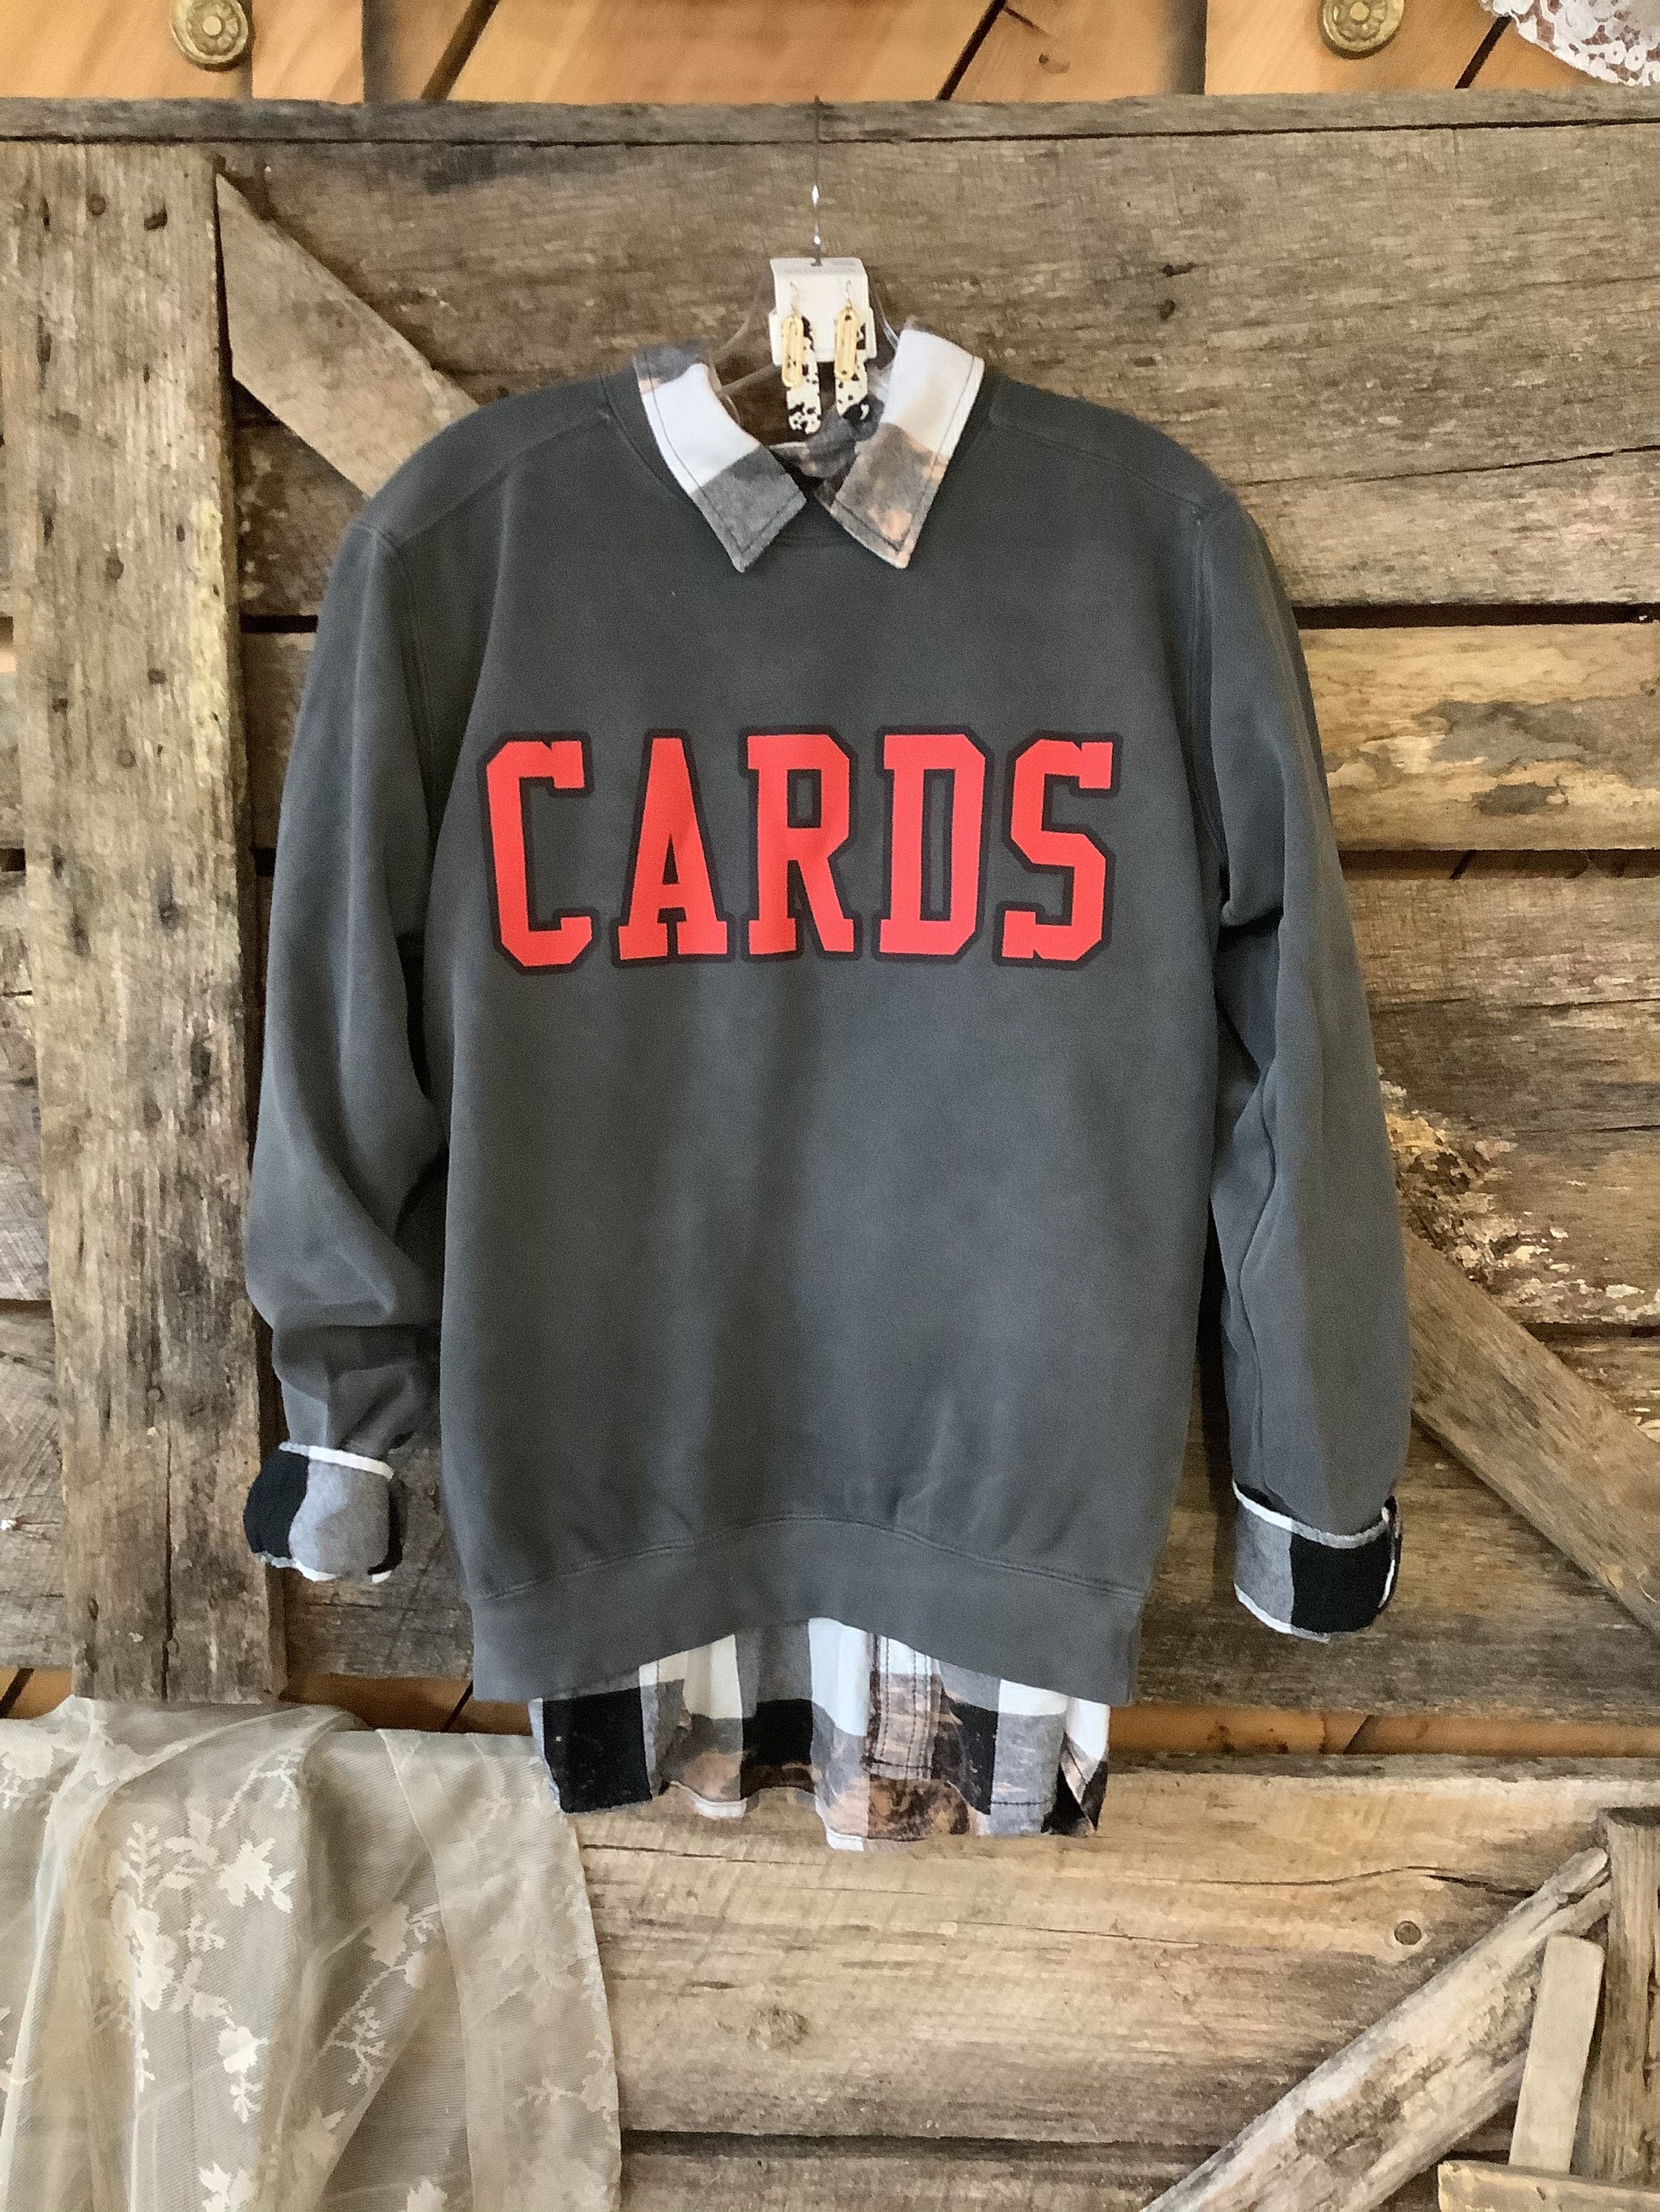 Louisville Cardinals Vintage 80s AOP Basketball Sweatshirt 